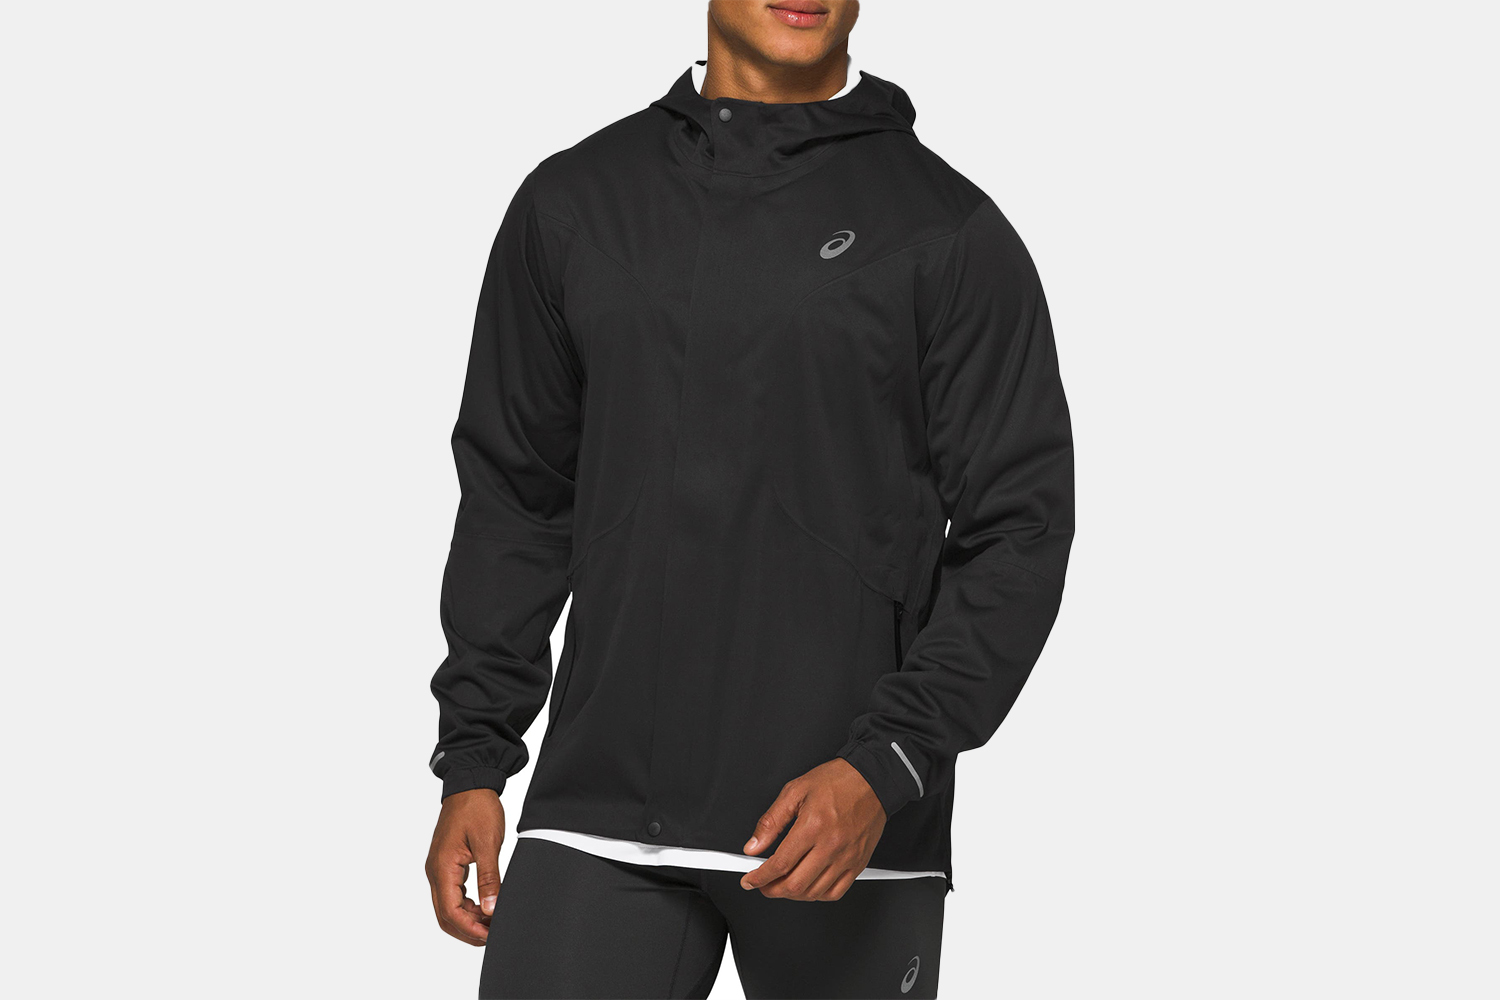 An all black running jacket